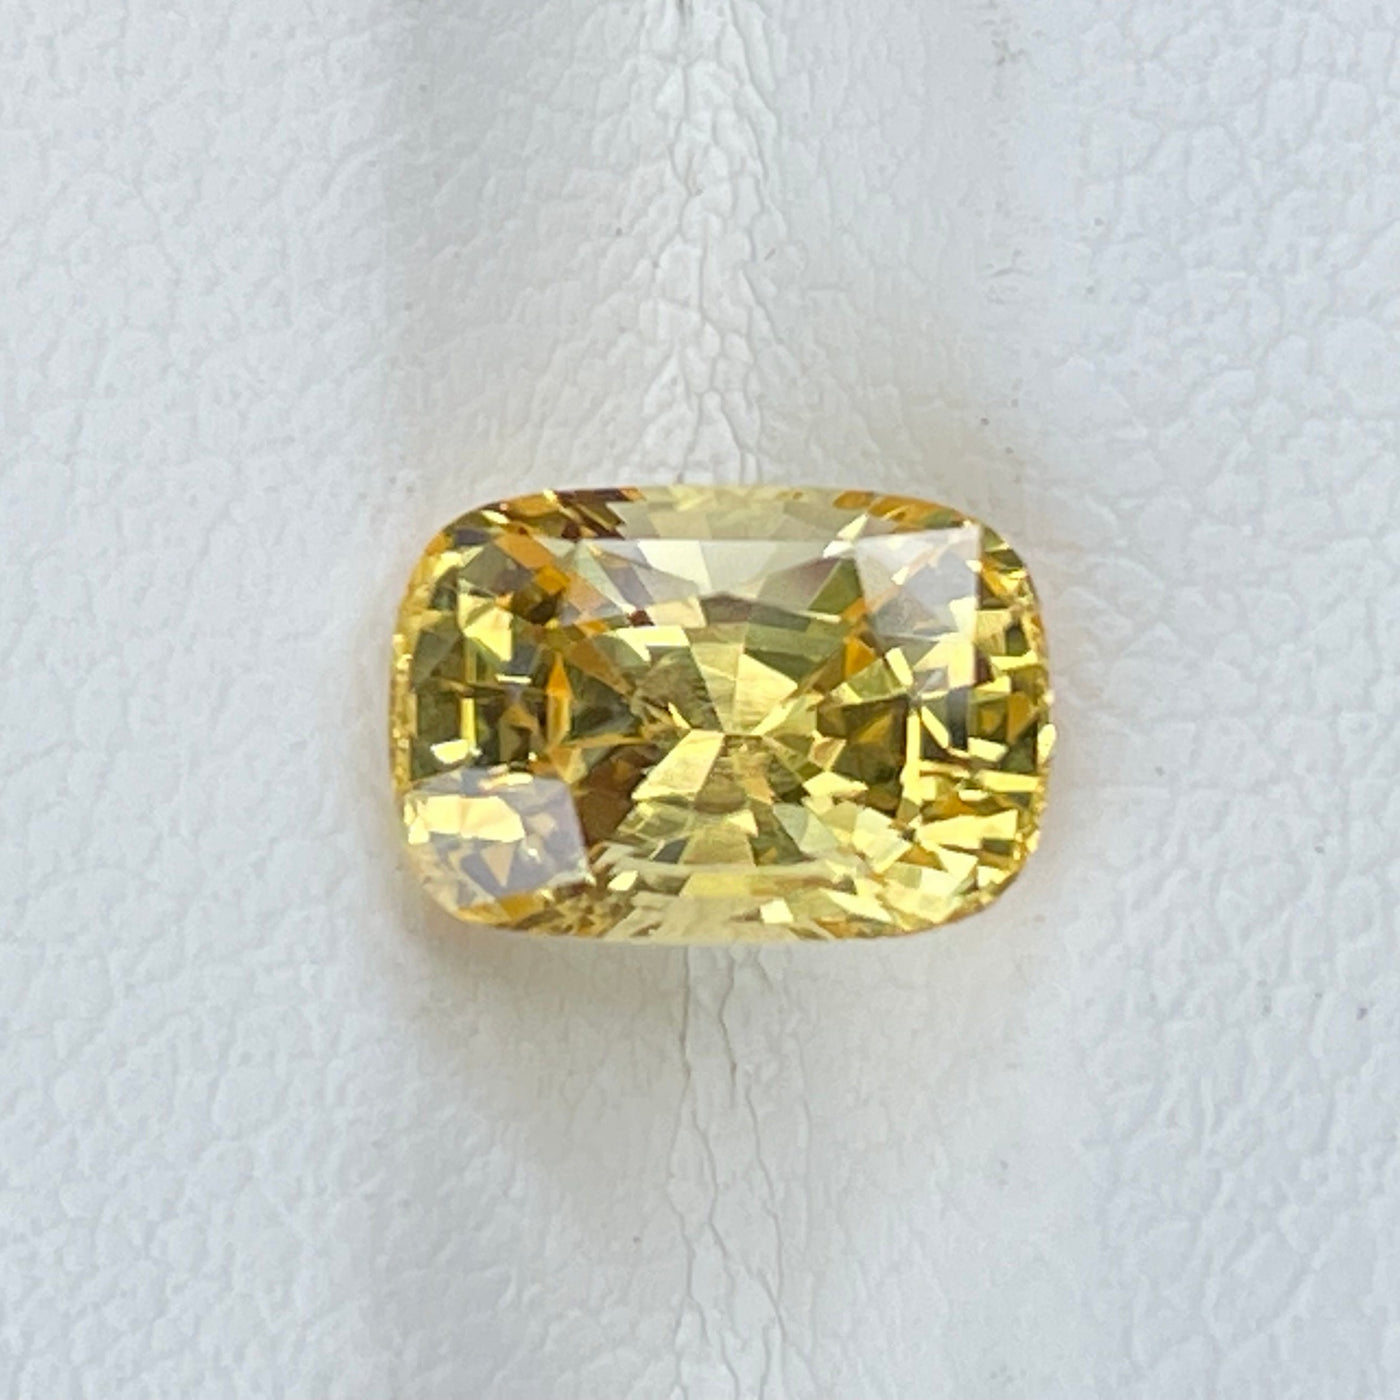 2.16 Ct Fine Yellow Sapphire For Bespoke Jewelry 